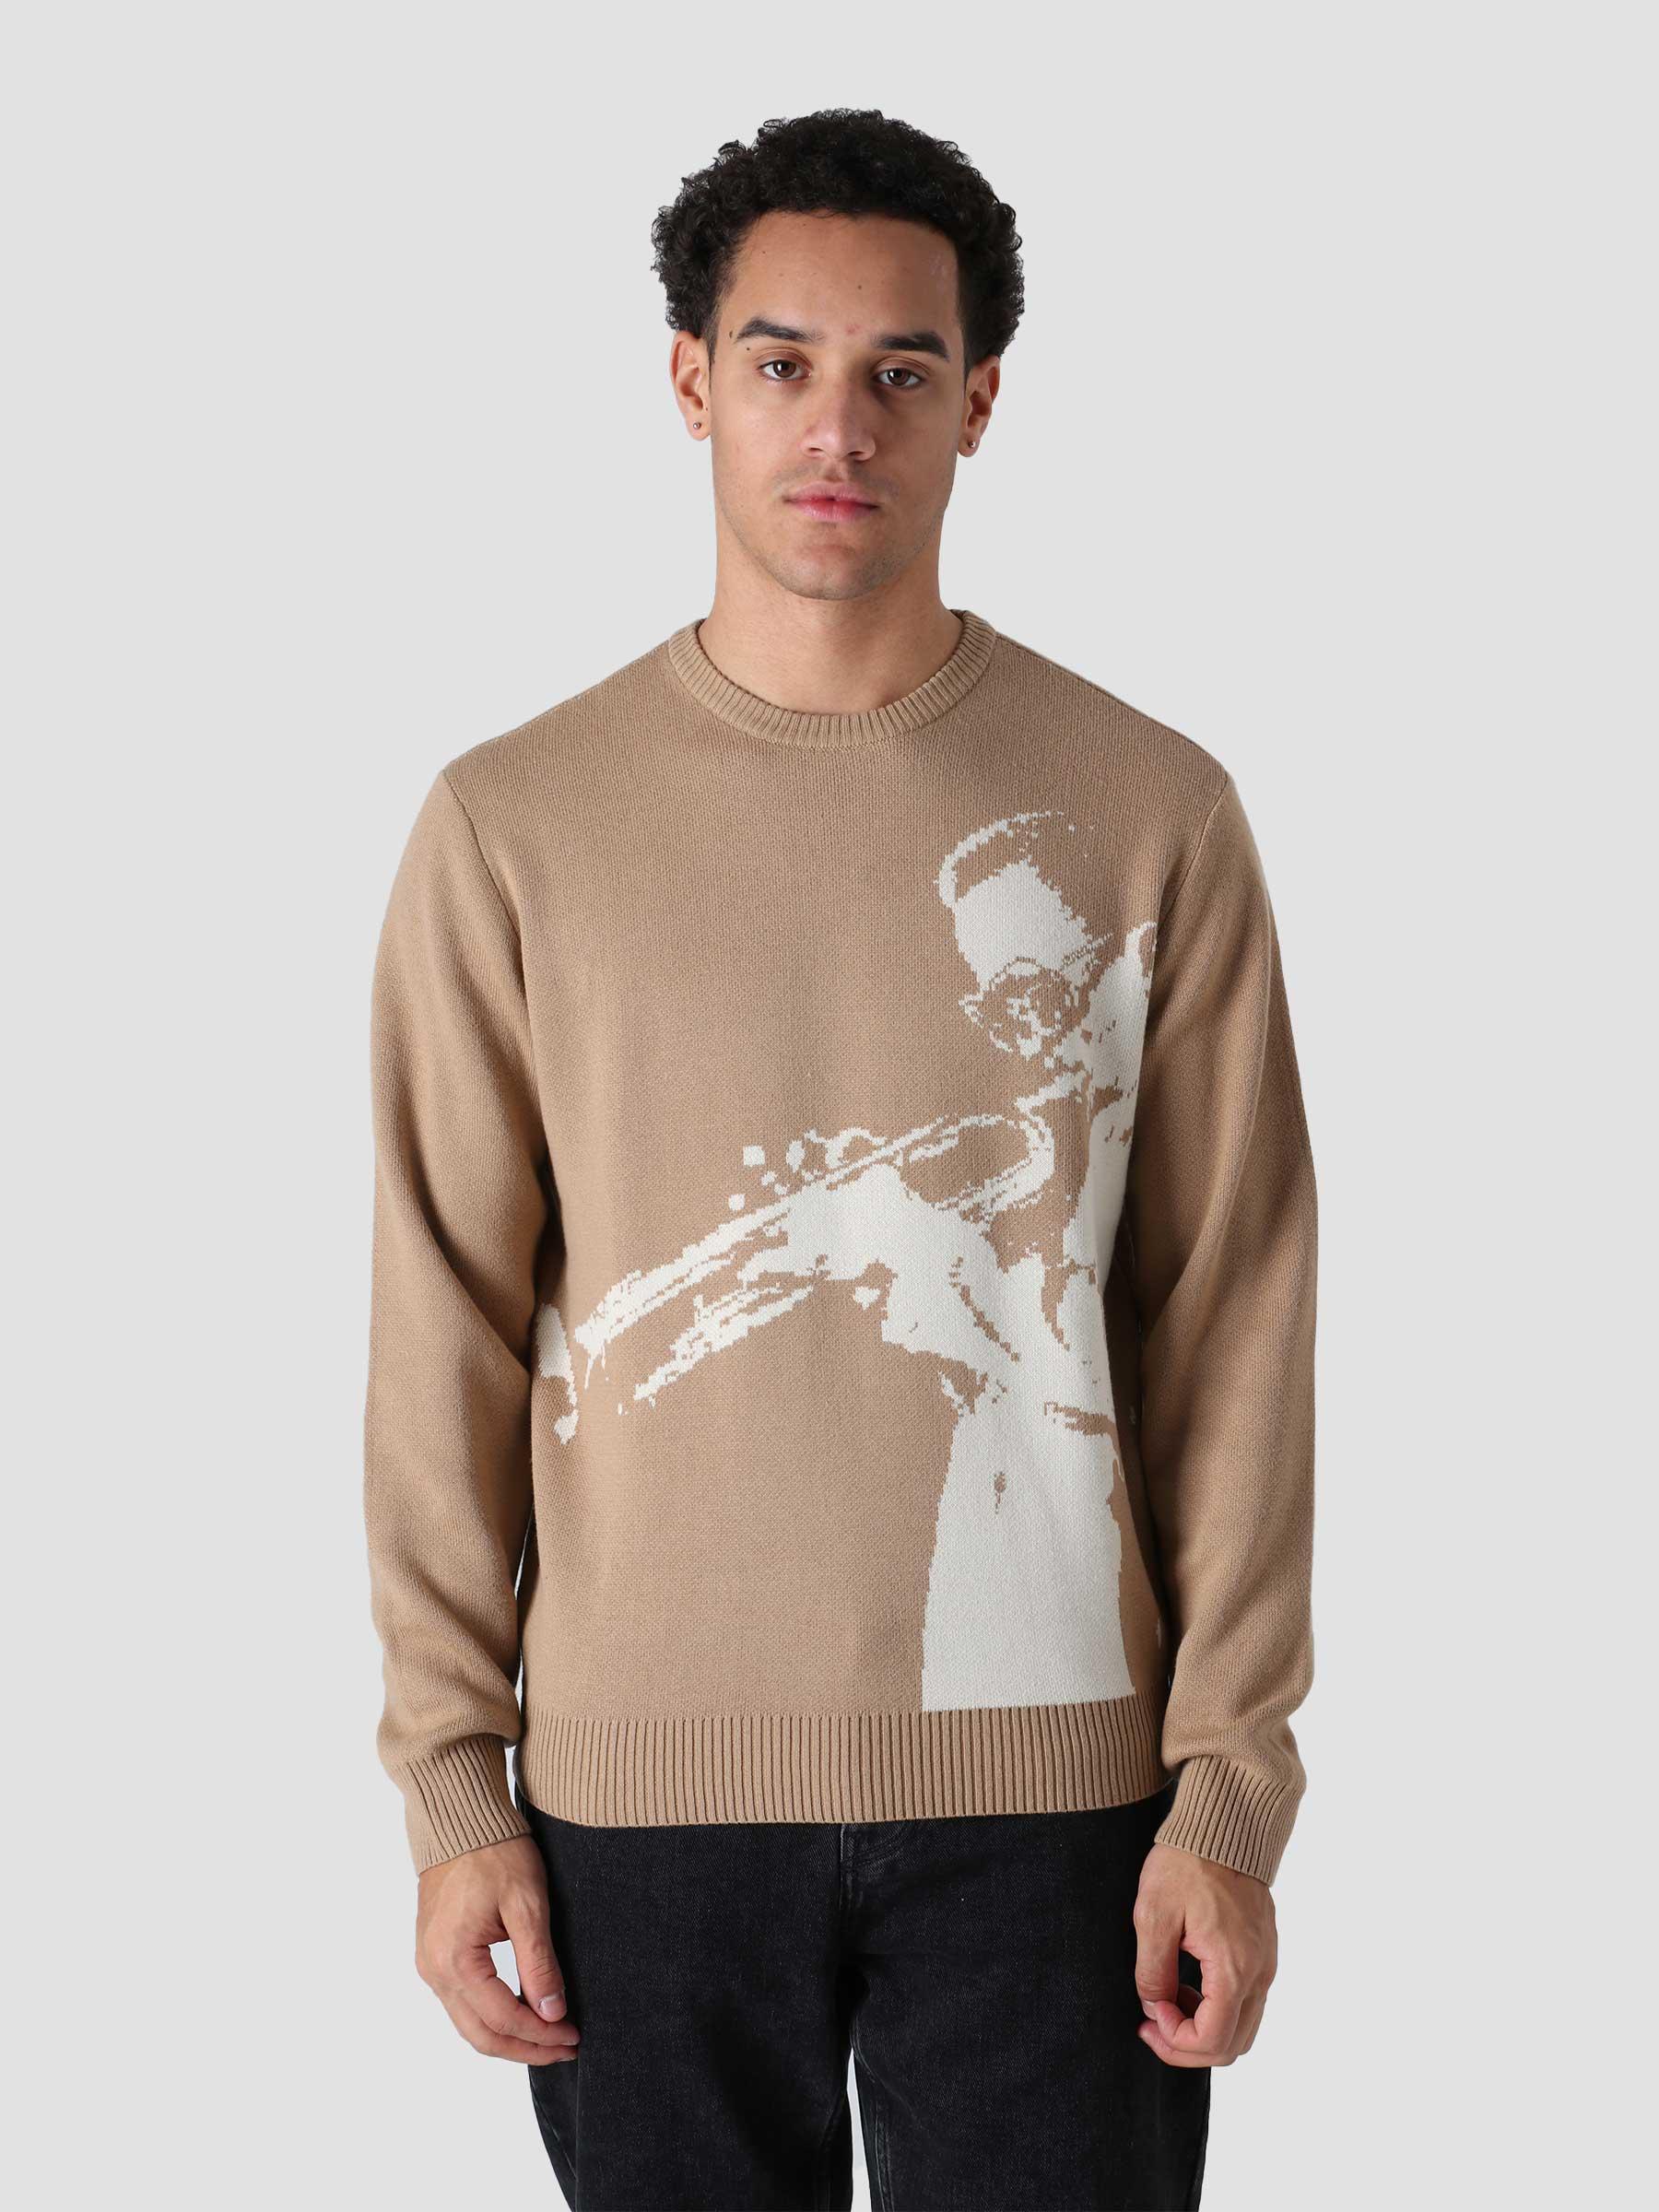 Mr Freedom X Jacquard Sweater Brown KN00364